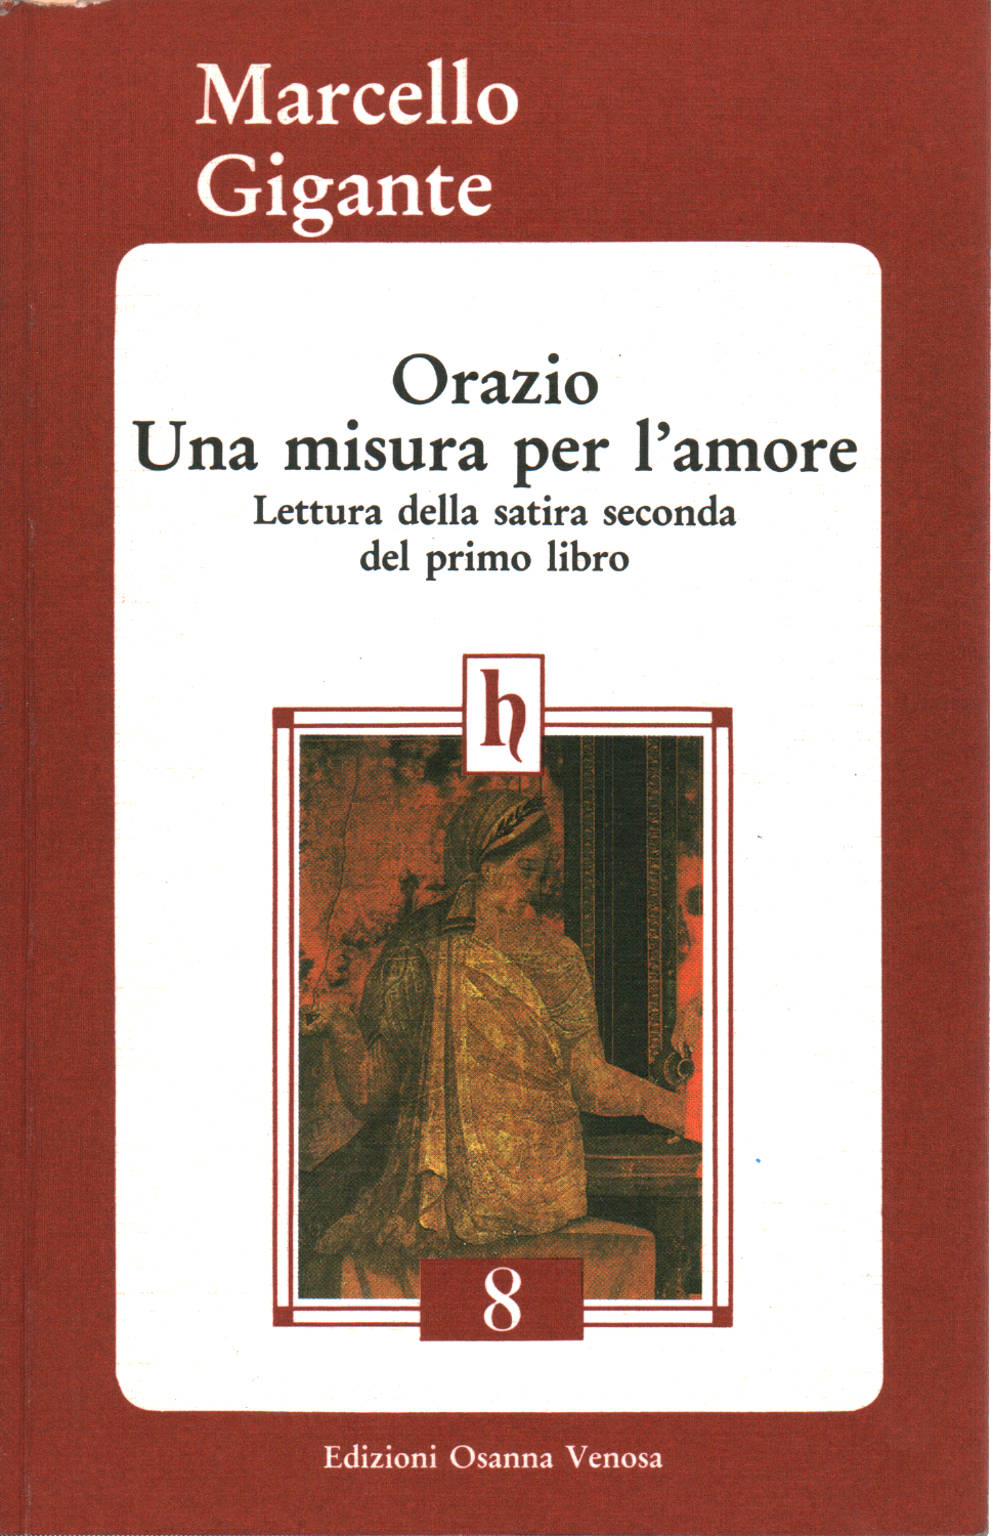 Horace A measure for love, Marcello Gigante